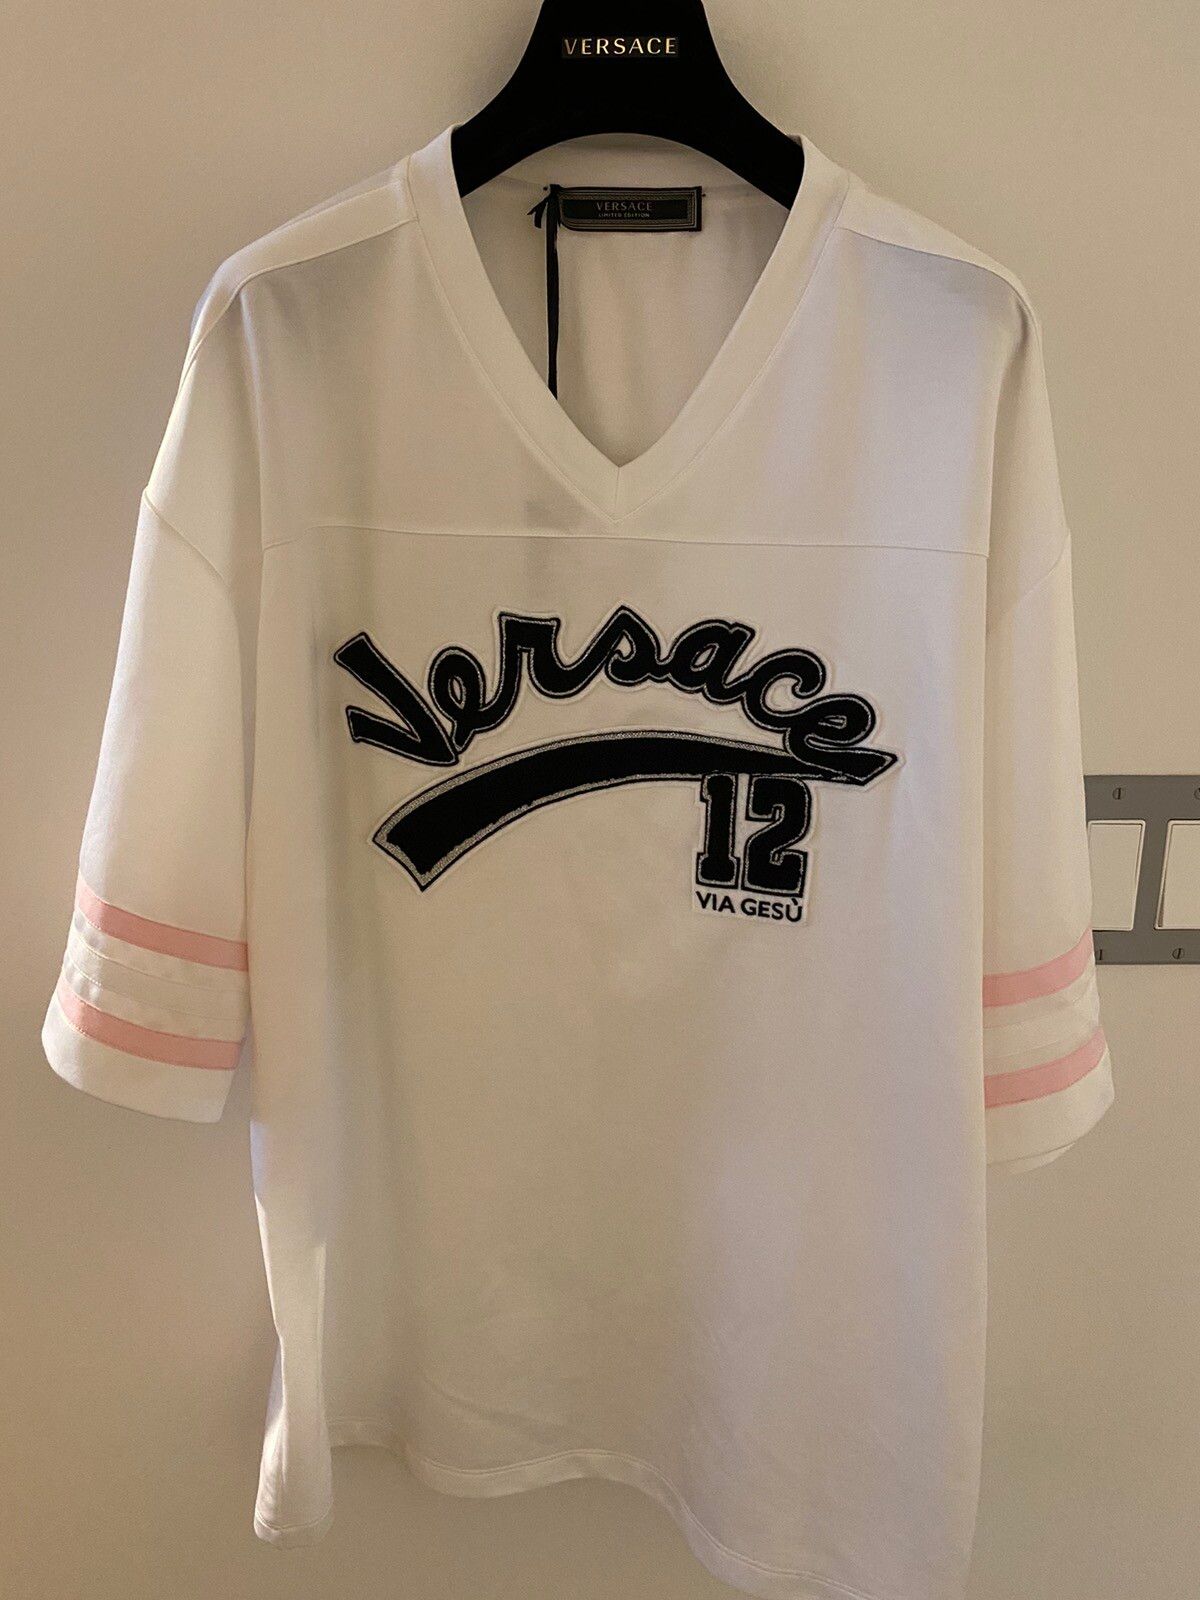 Versace Limited Edition Via Gesu Runway Jersey T-shirt $1,050 New Size US L / EU 52-54 / 3 - 1 Preview